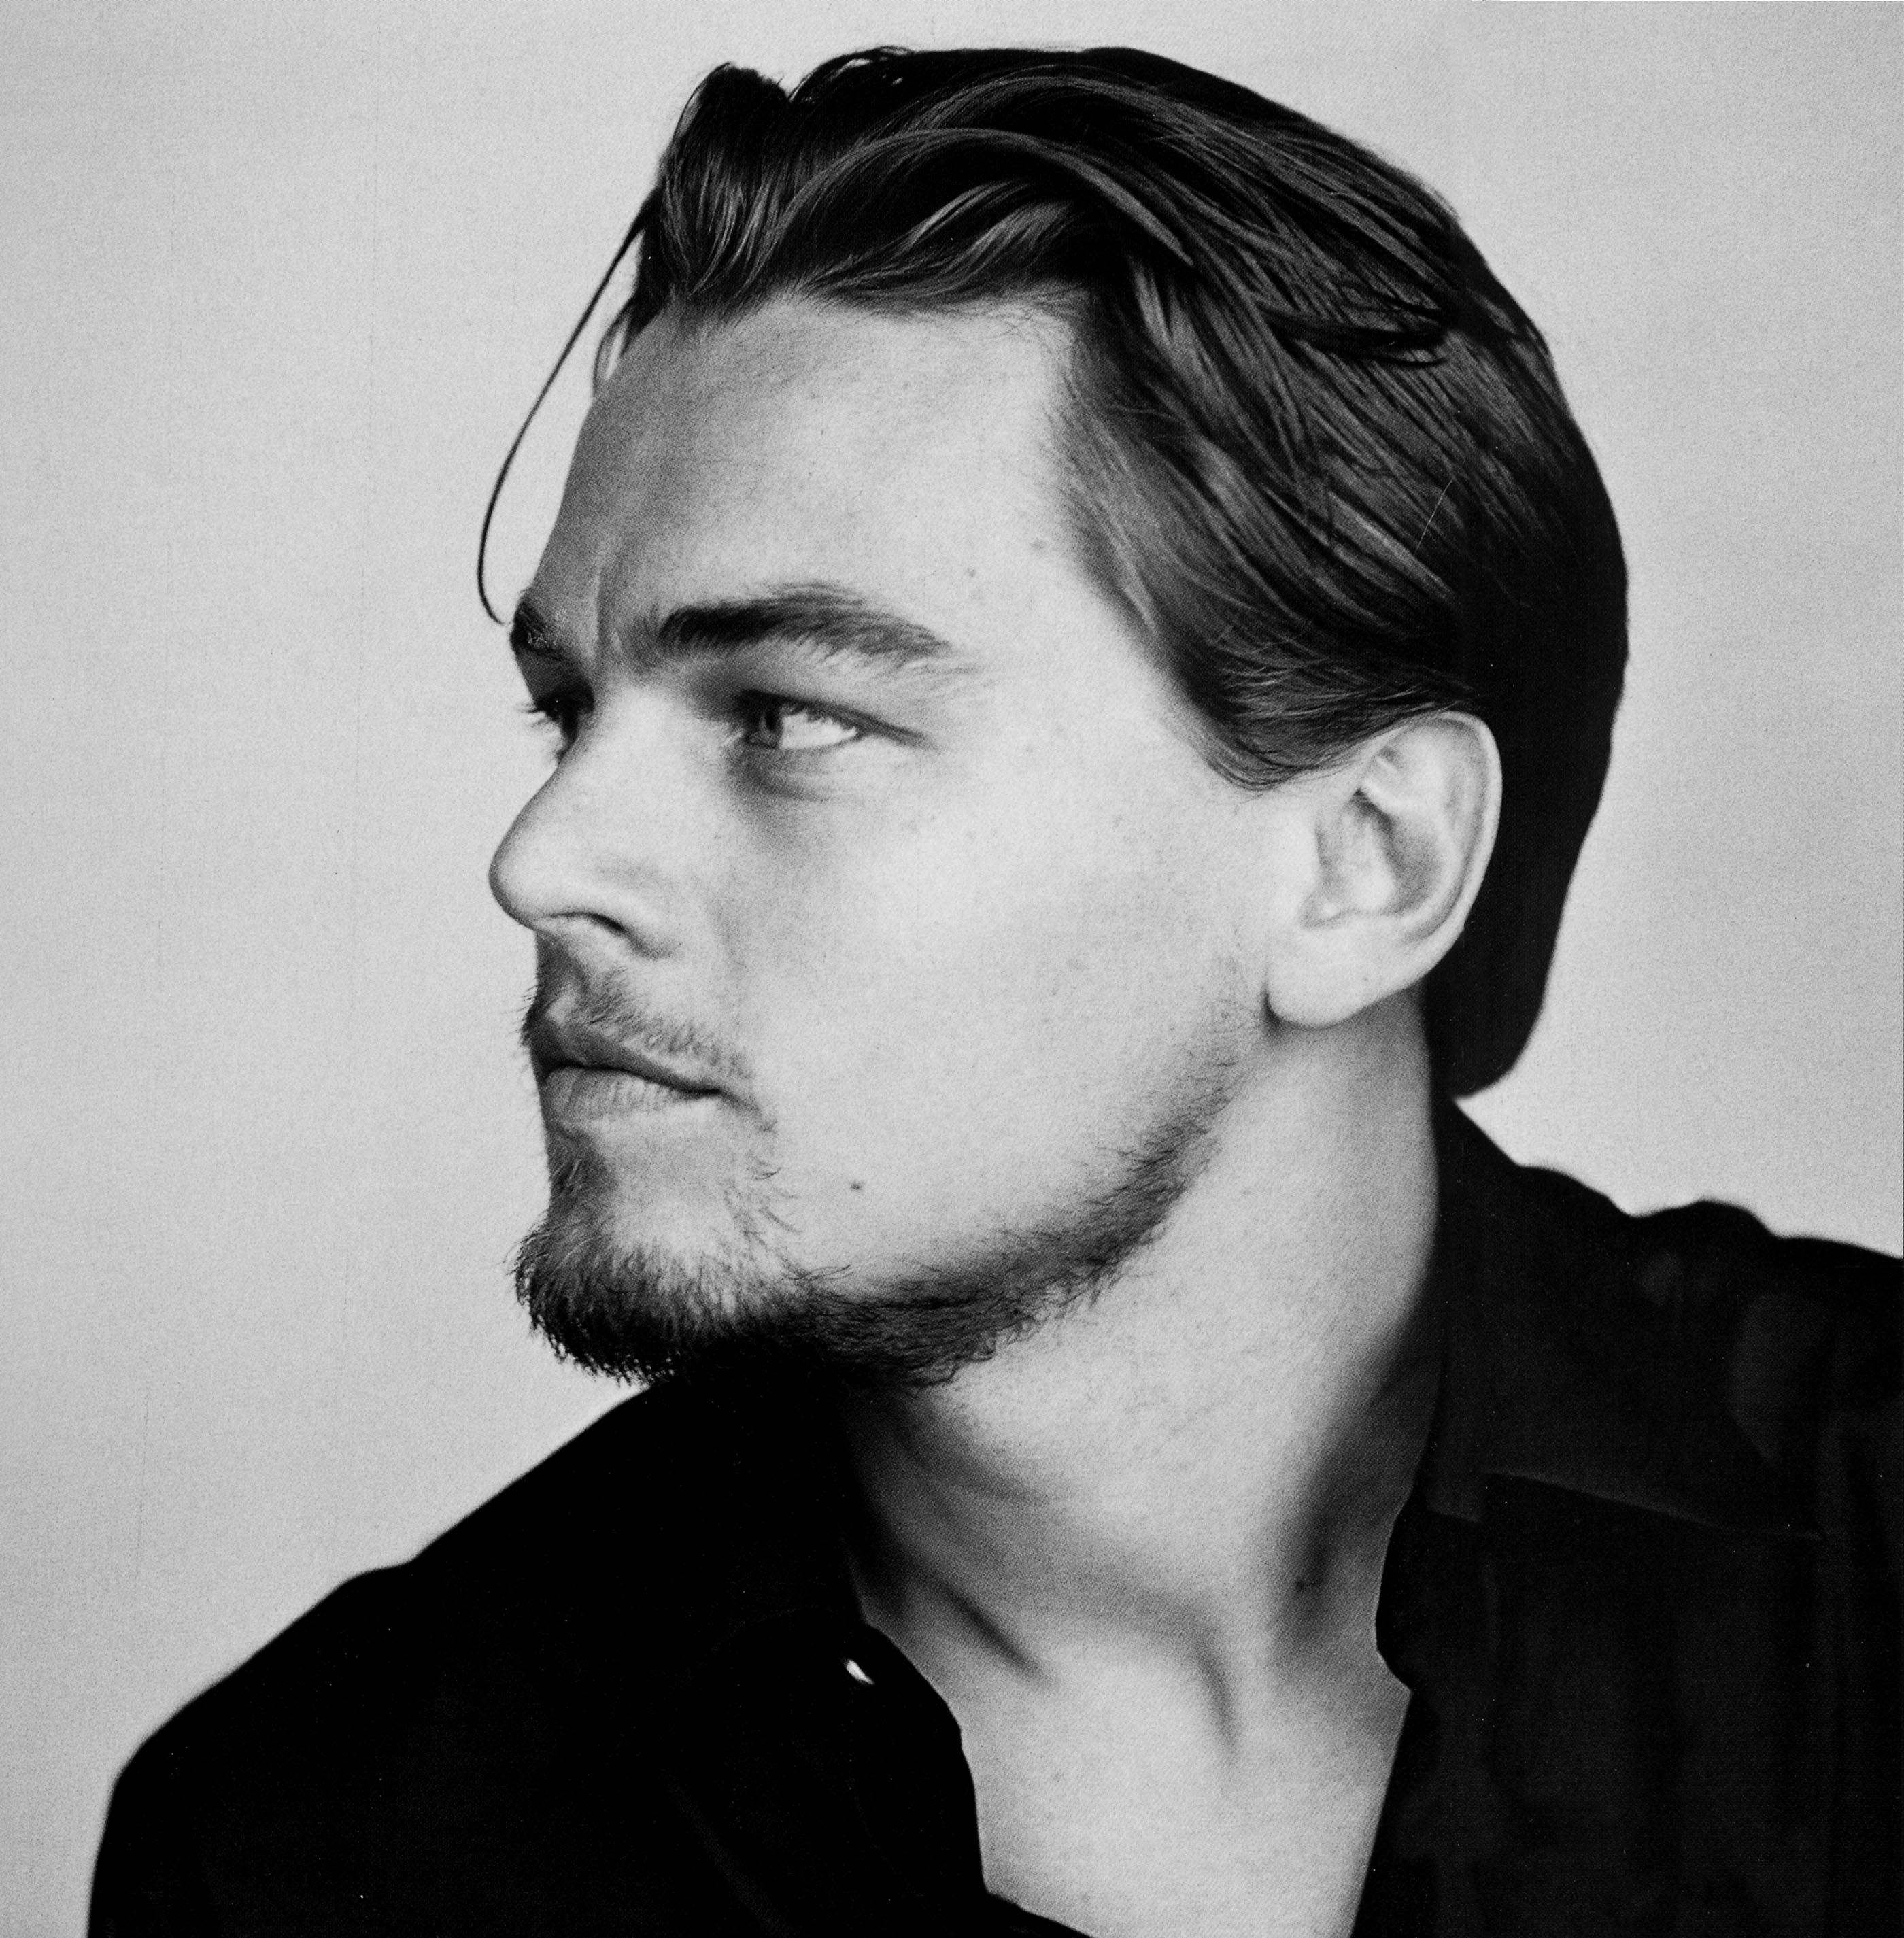 Leonardo DiCaprio photo 199 of 1144 pics, wallpaper - photo #353493 ...